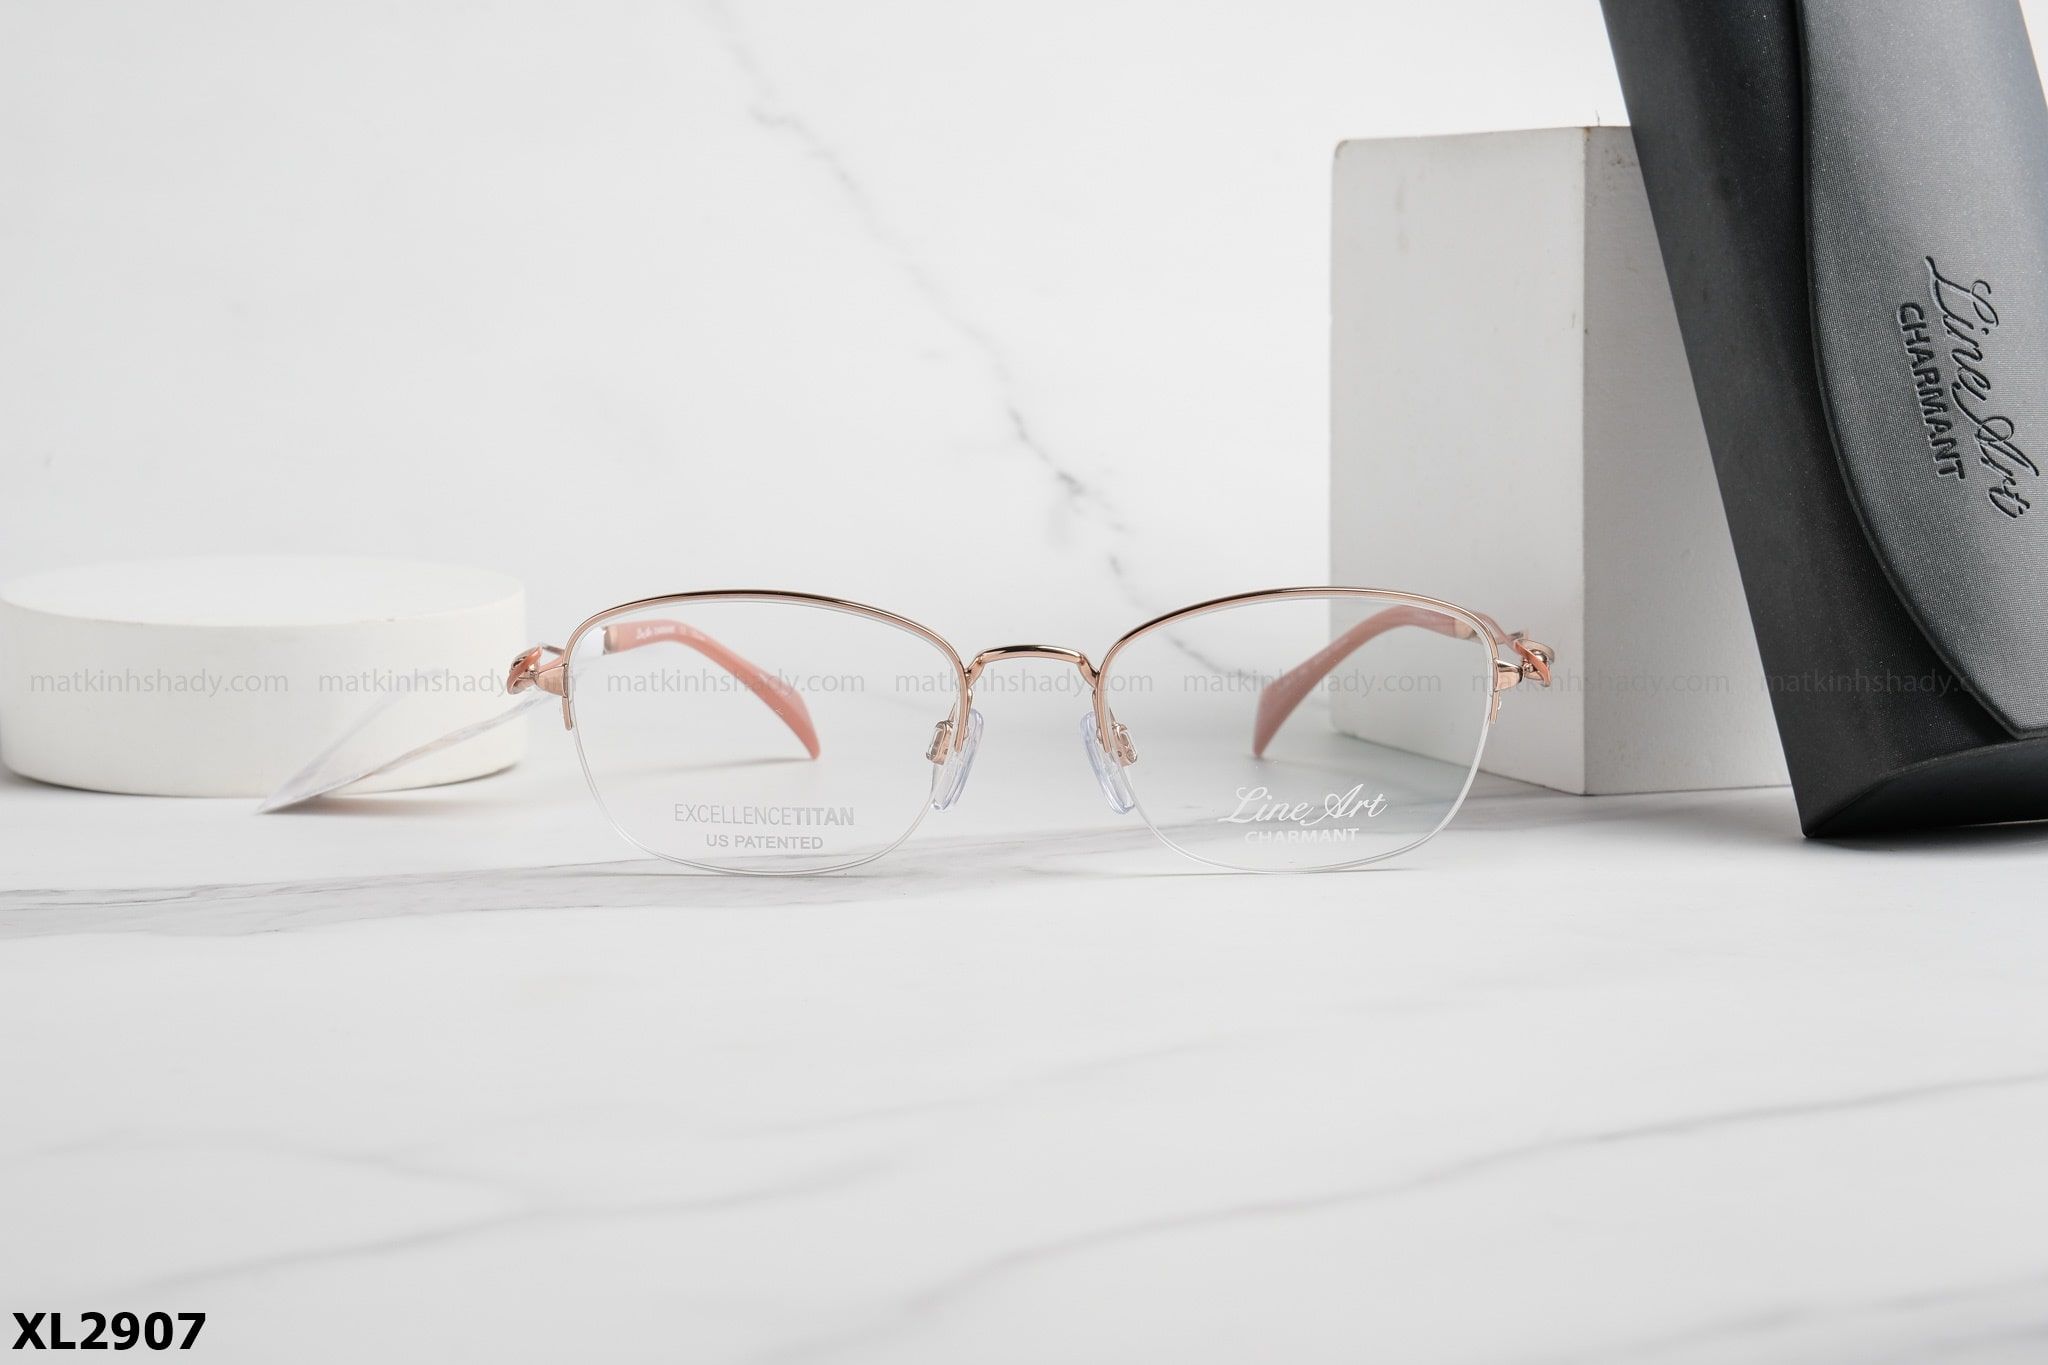  LINE ART CHARMANT Eyewear - Glasses - XL2907 